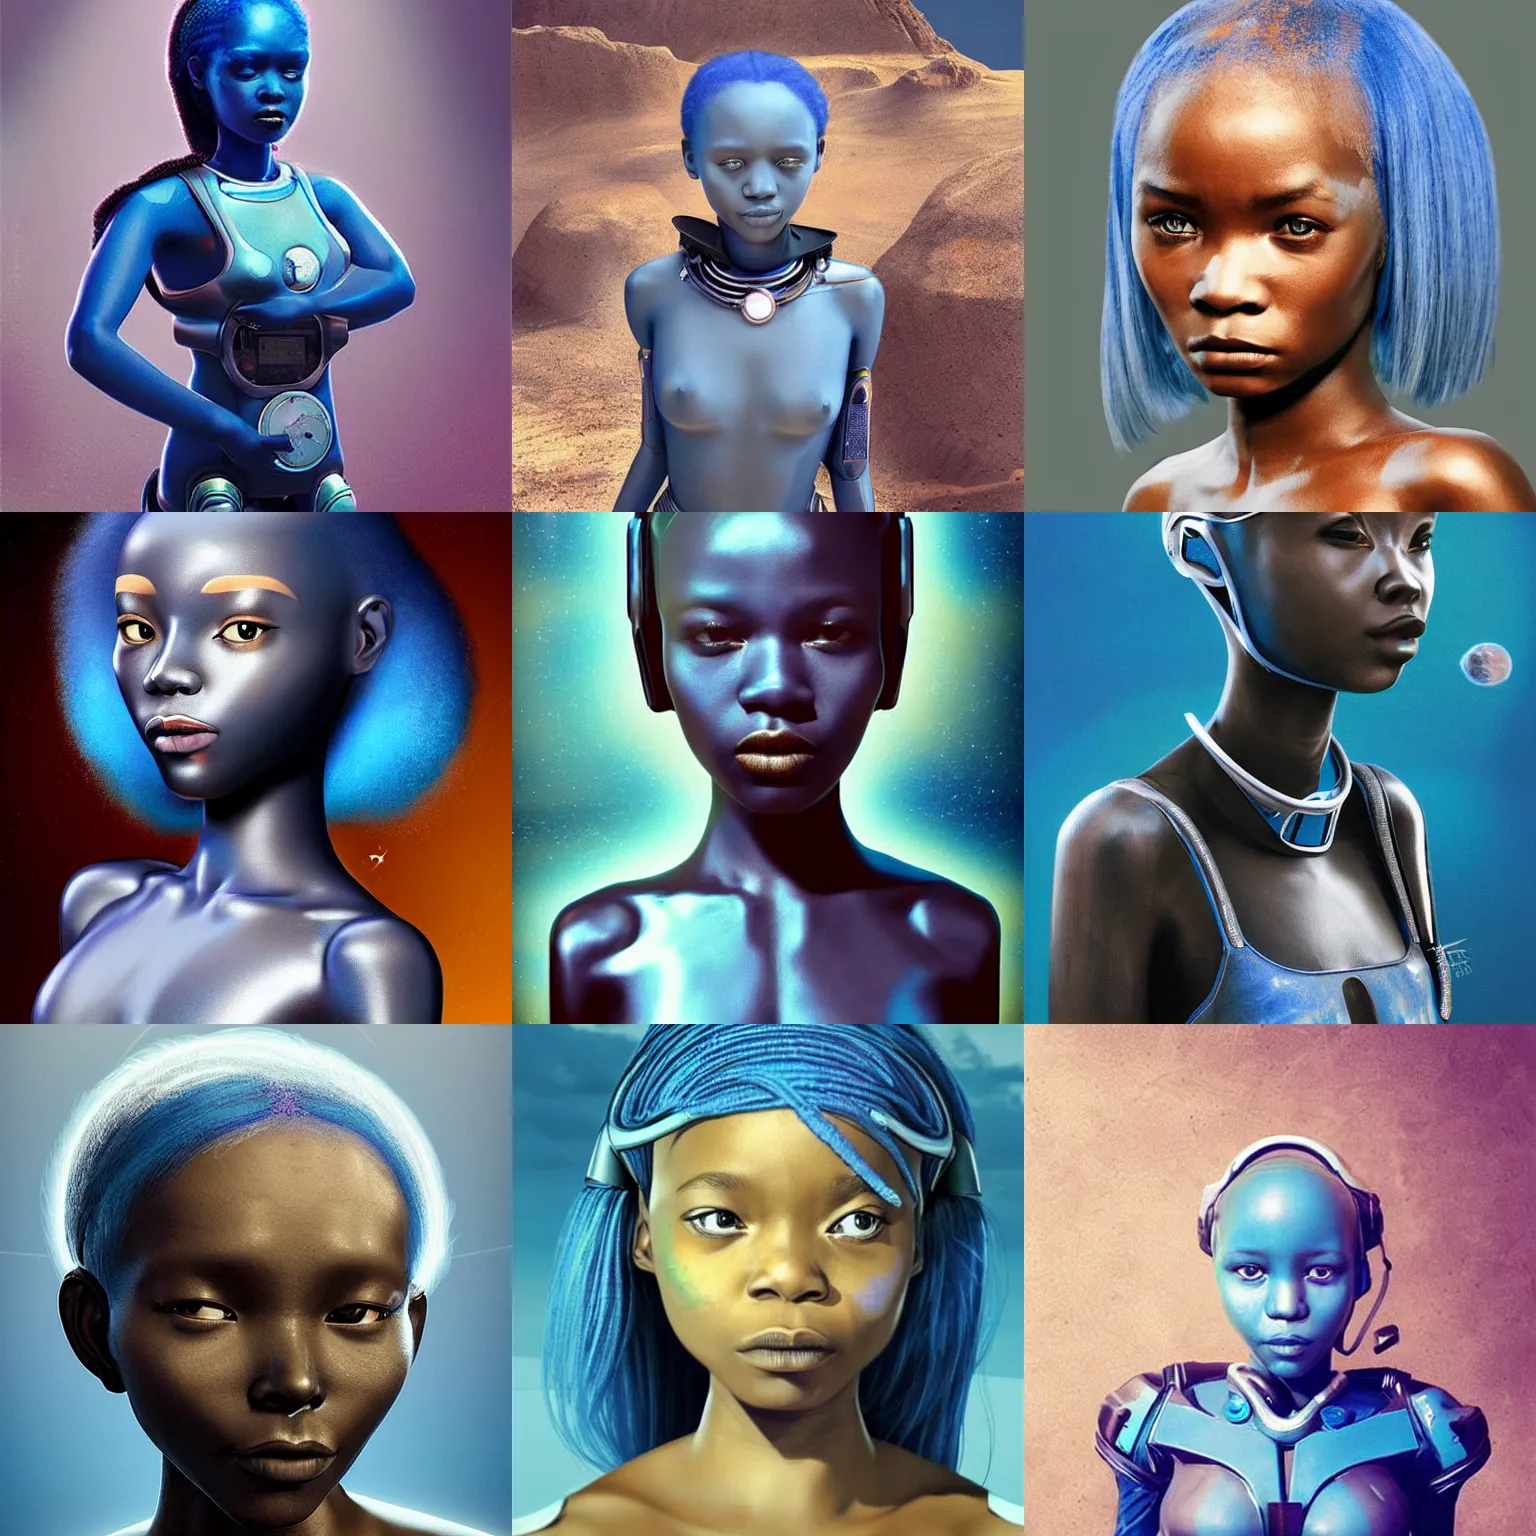 Prompt: beautiful futuristic himba astronaut girl, robotic arms, blue hair, weightless, hyperrealistic, scifi, concept art, photograph